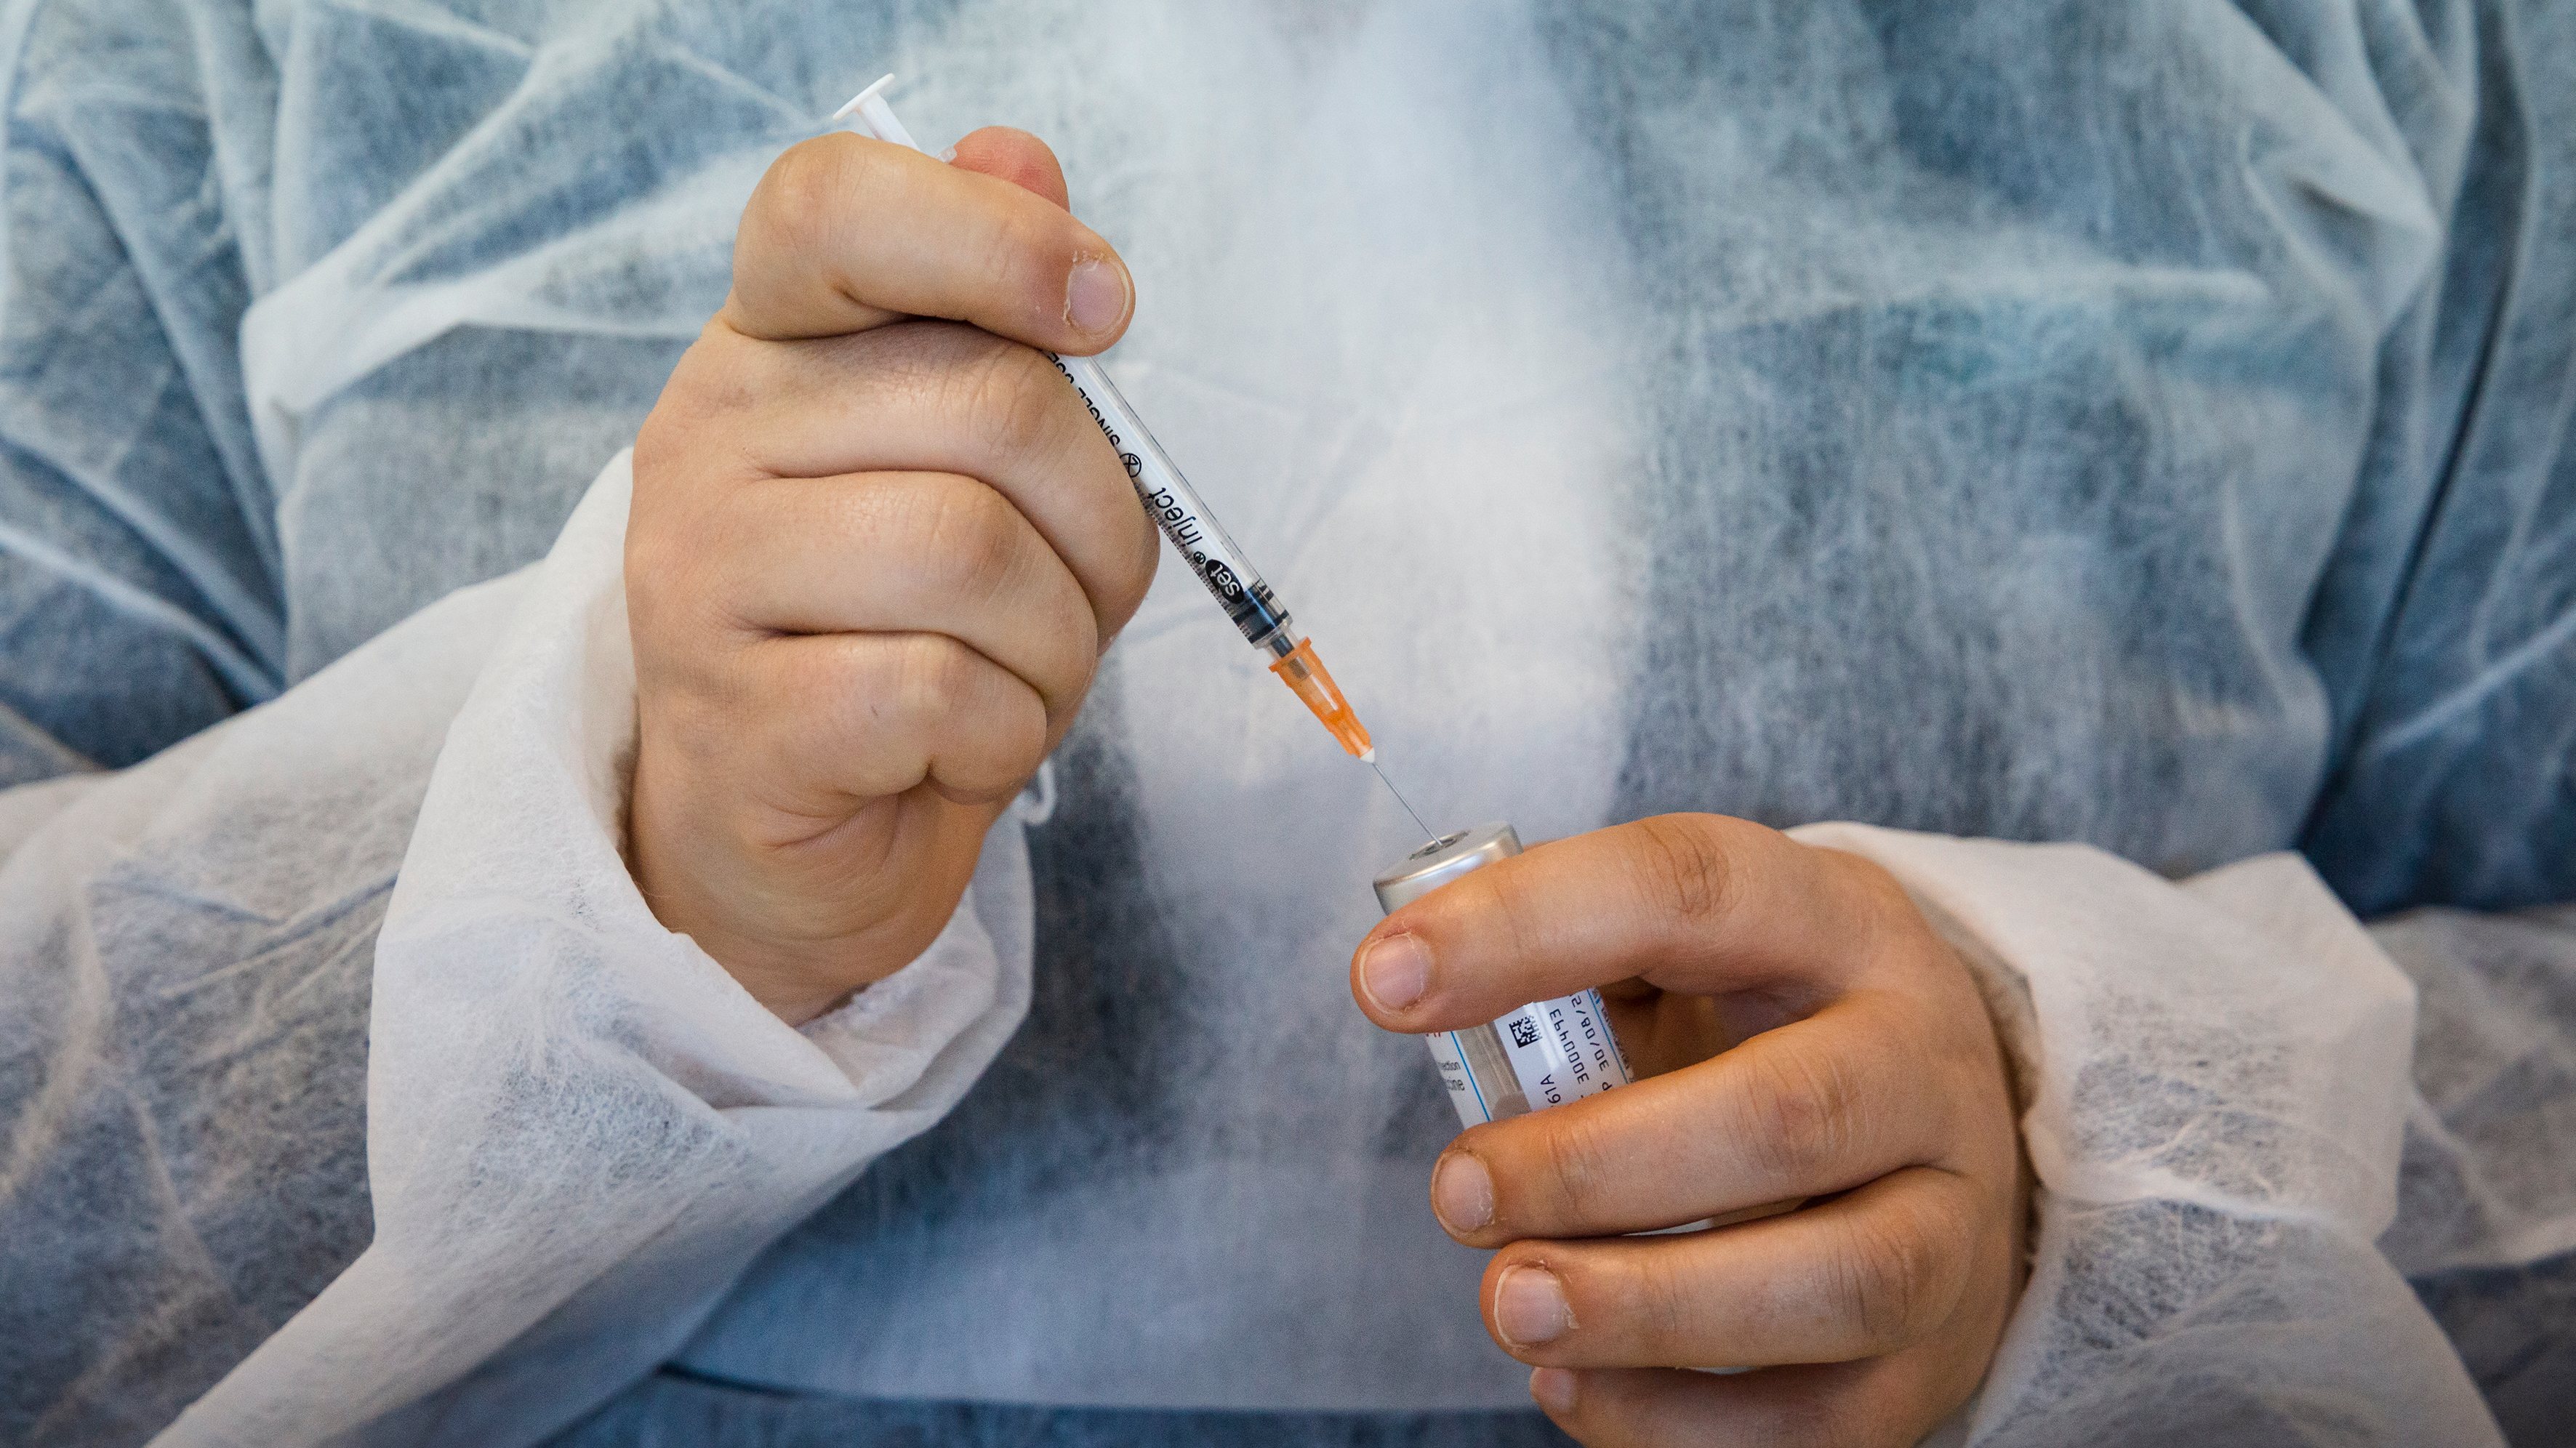 Second Dose Of Moderna Vaccine In Portugal